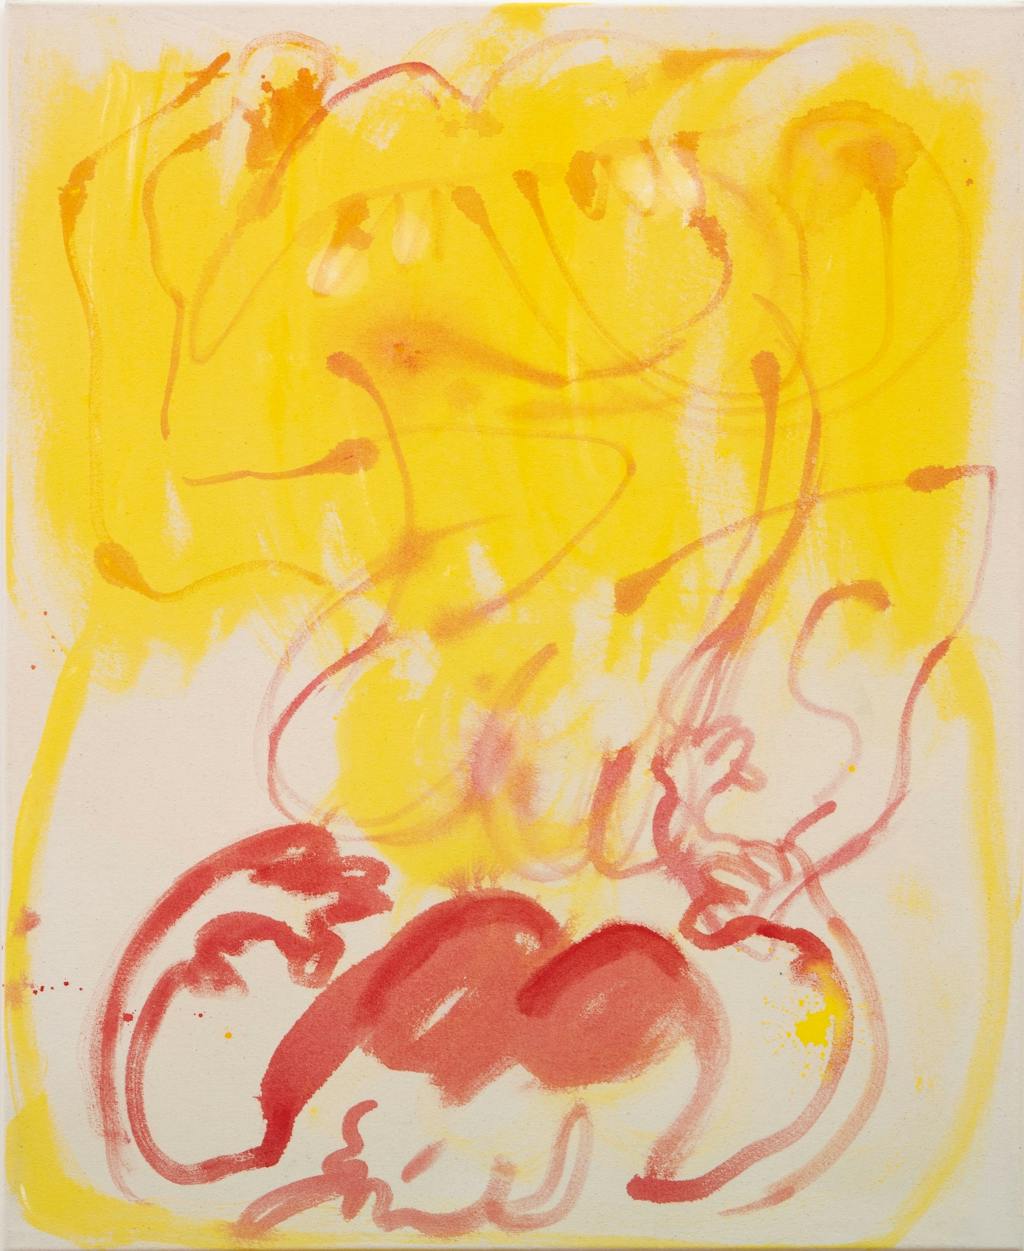 Andrea Éva Győri, Back with Light Nipples, 2019, ink and gouache on canvas, 110 x 90 cm. Photo: Robert Glas - © Photo: Robert Glas, Paris Internationale